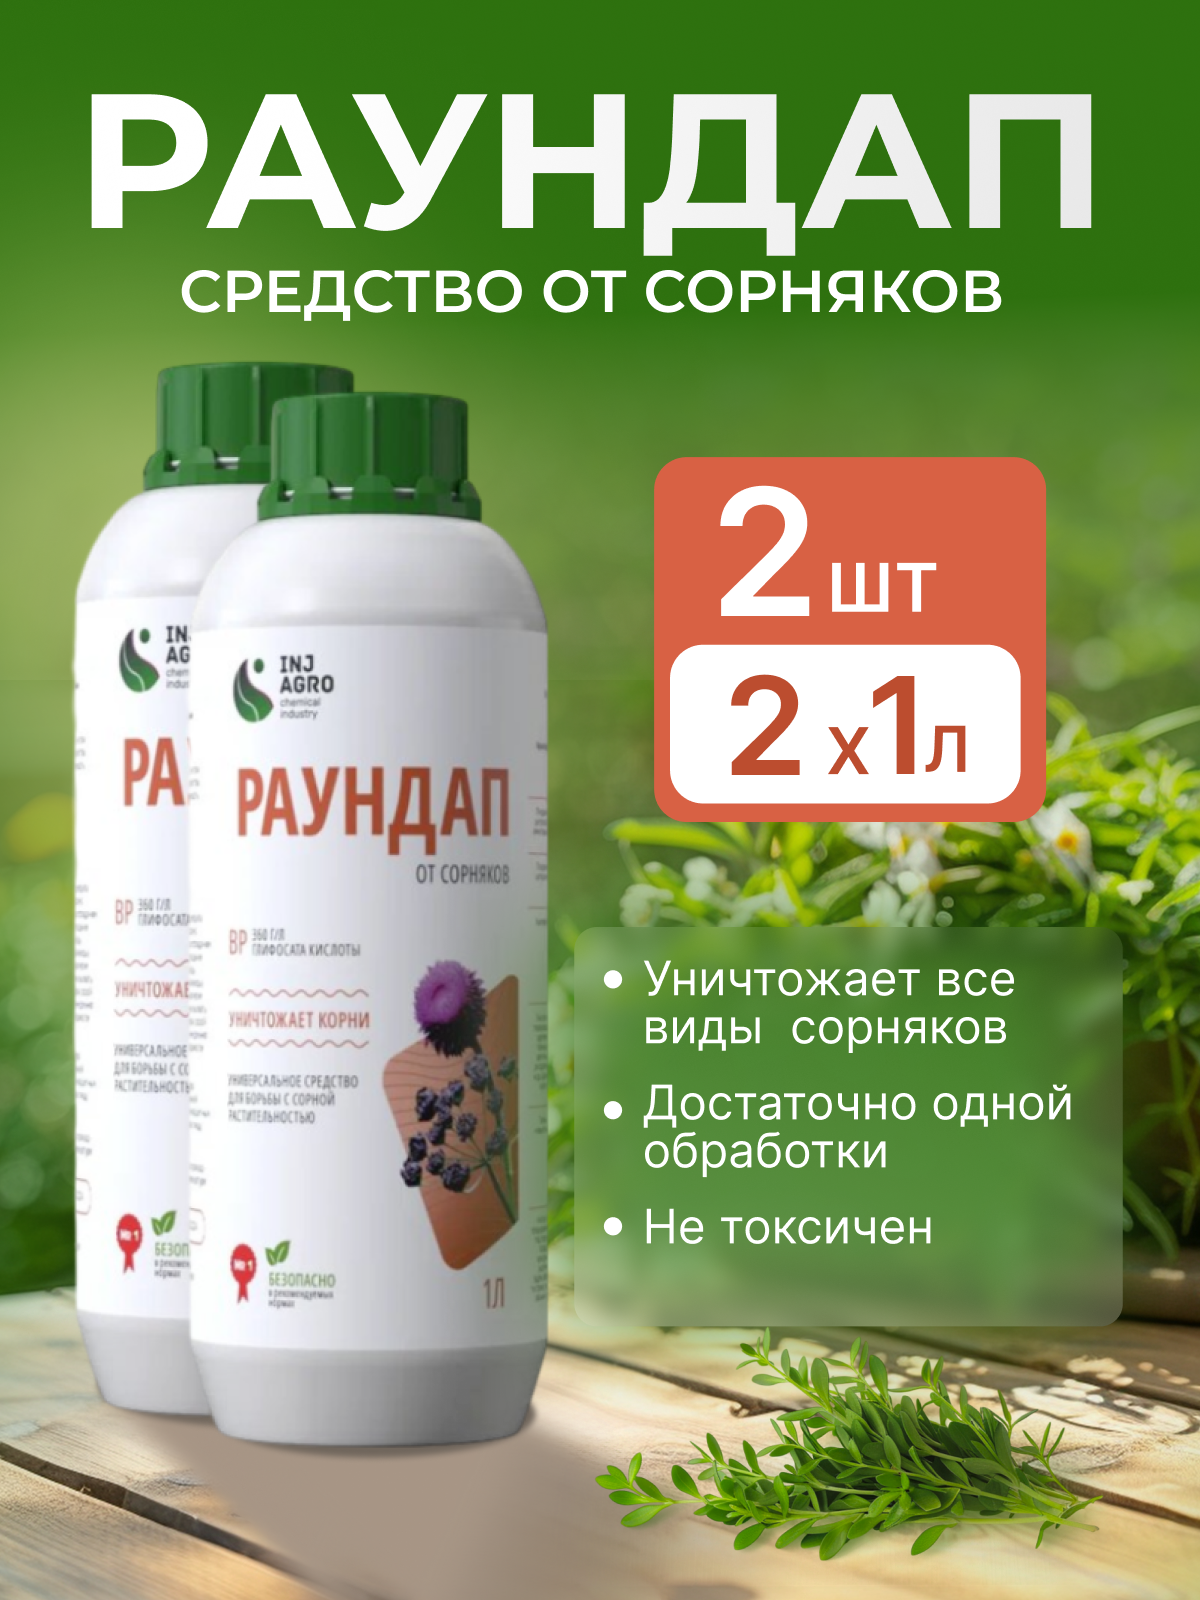 "INJ Раундап" - гербицид для борьбы с сорняками 1 литр -2 шт